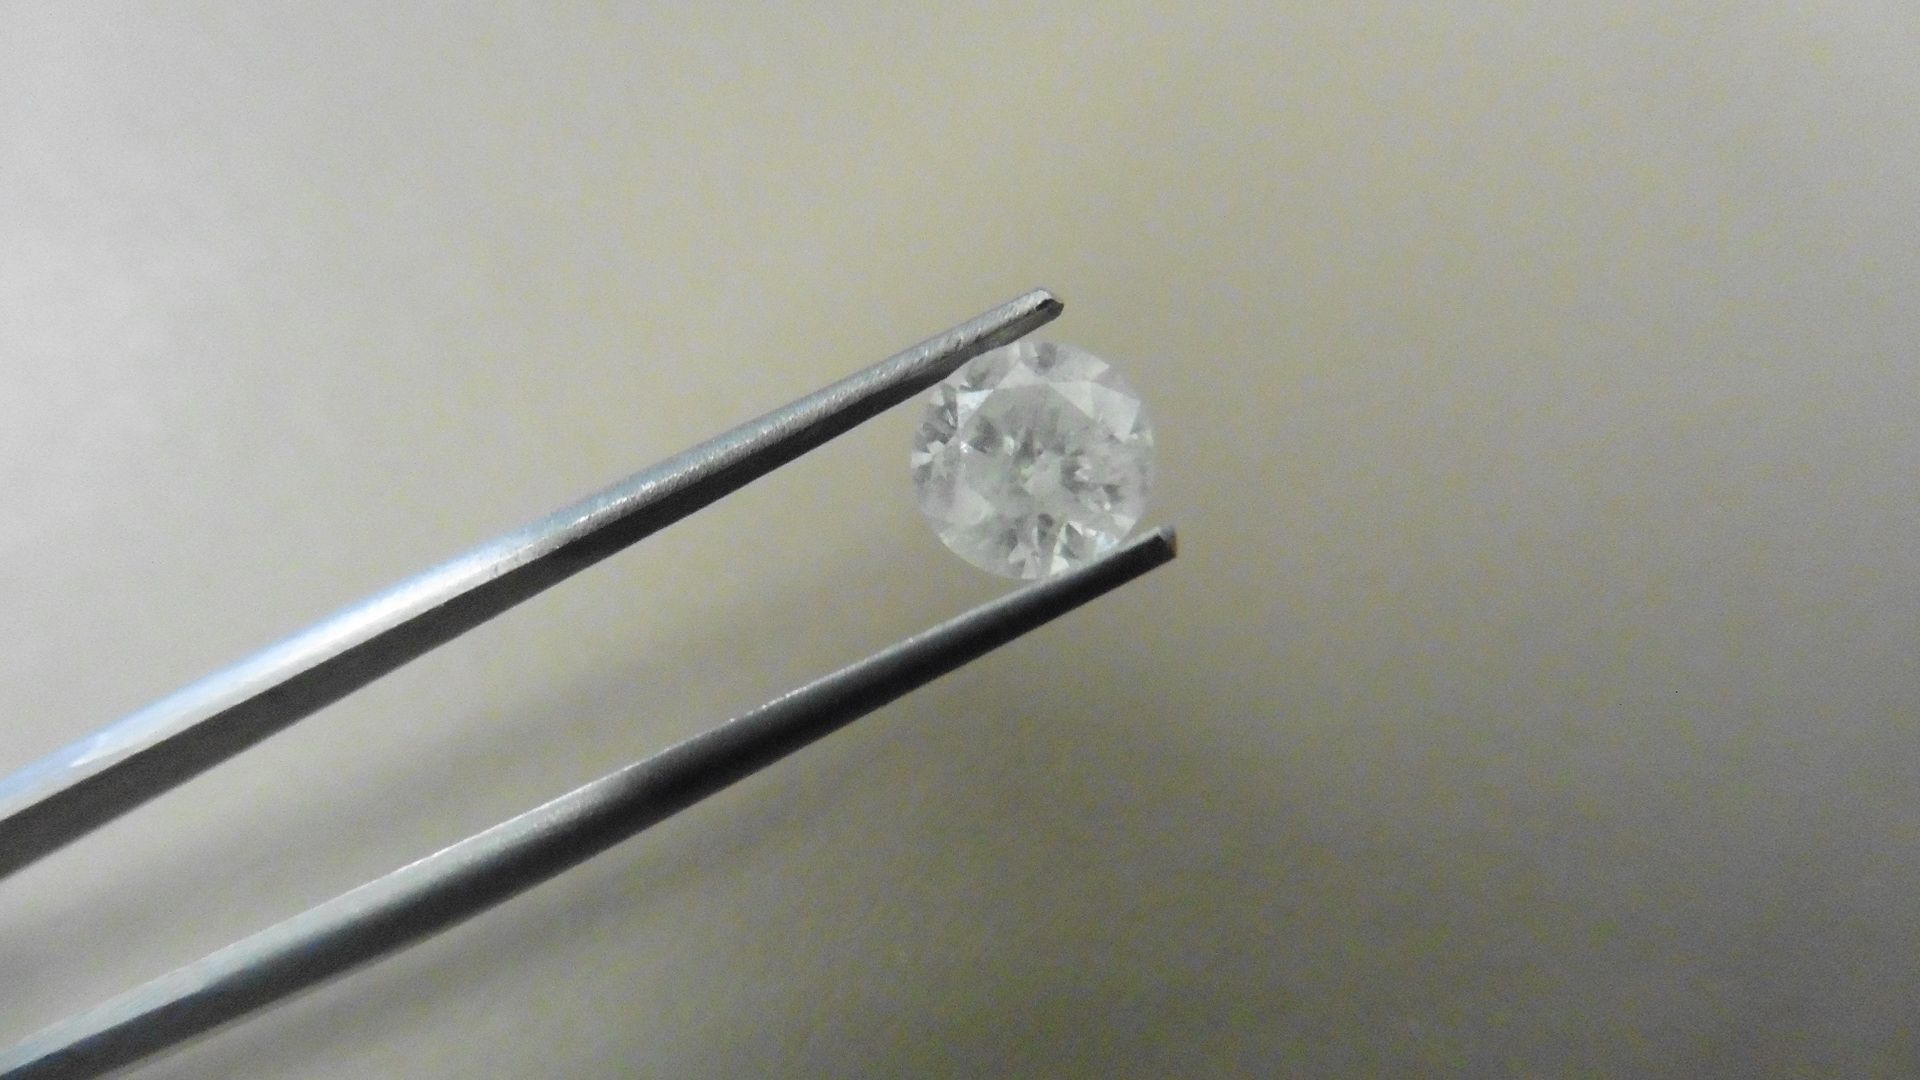 1.17ct Brilliant Cut Diamond, Enhanced stone. H colour, I2 clarity. 6.56 x 4.17mm. Valued at £